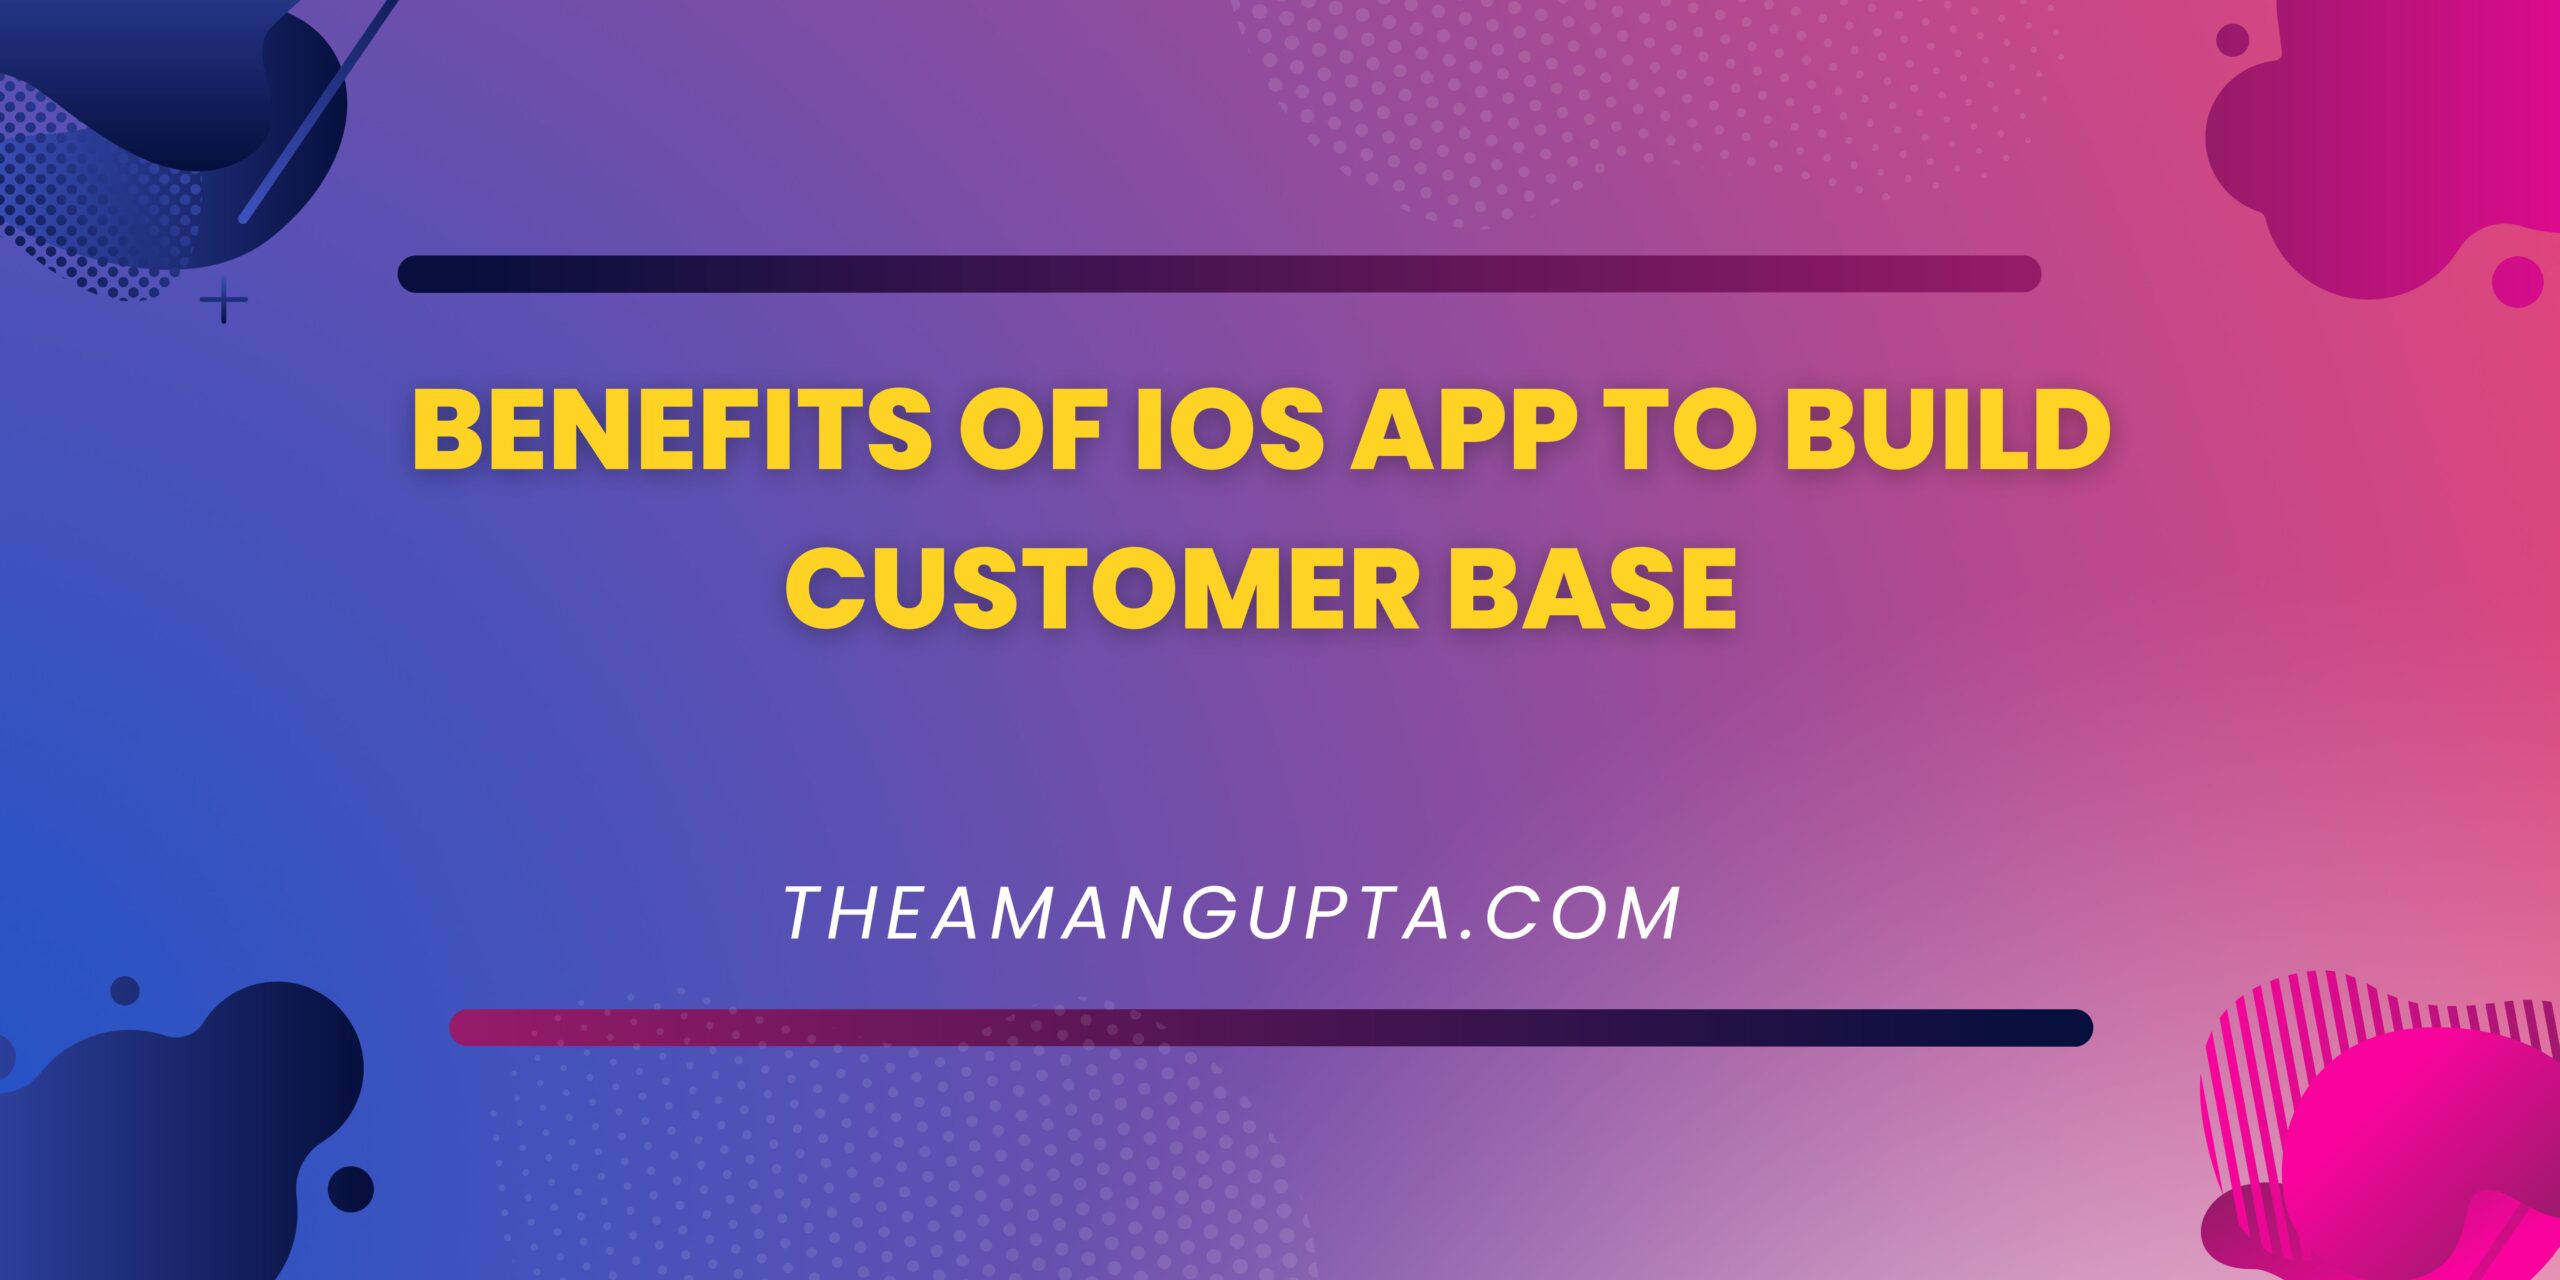 Benefits Of iOS App To Build Customer Base|Benefits Of iOS App To Build Customer Base|Theamangupta|Theamangupta